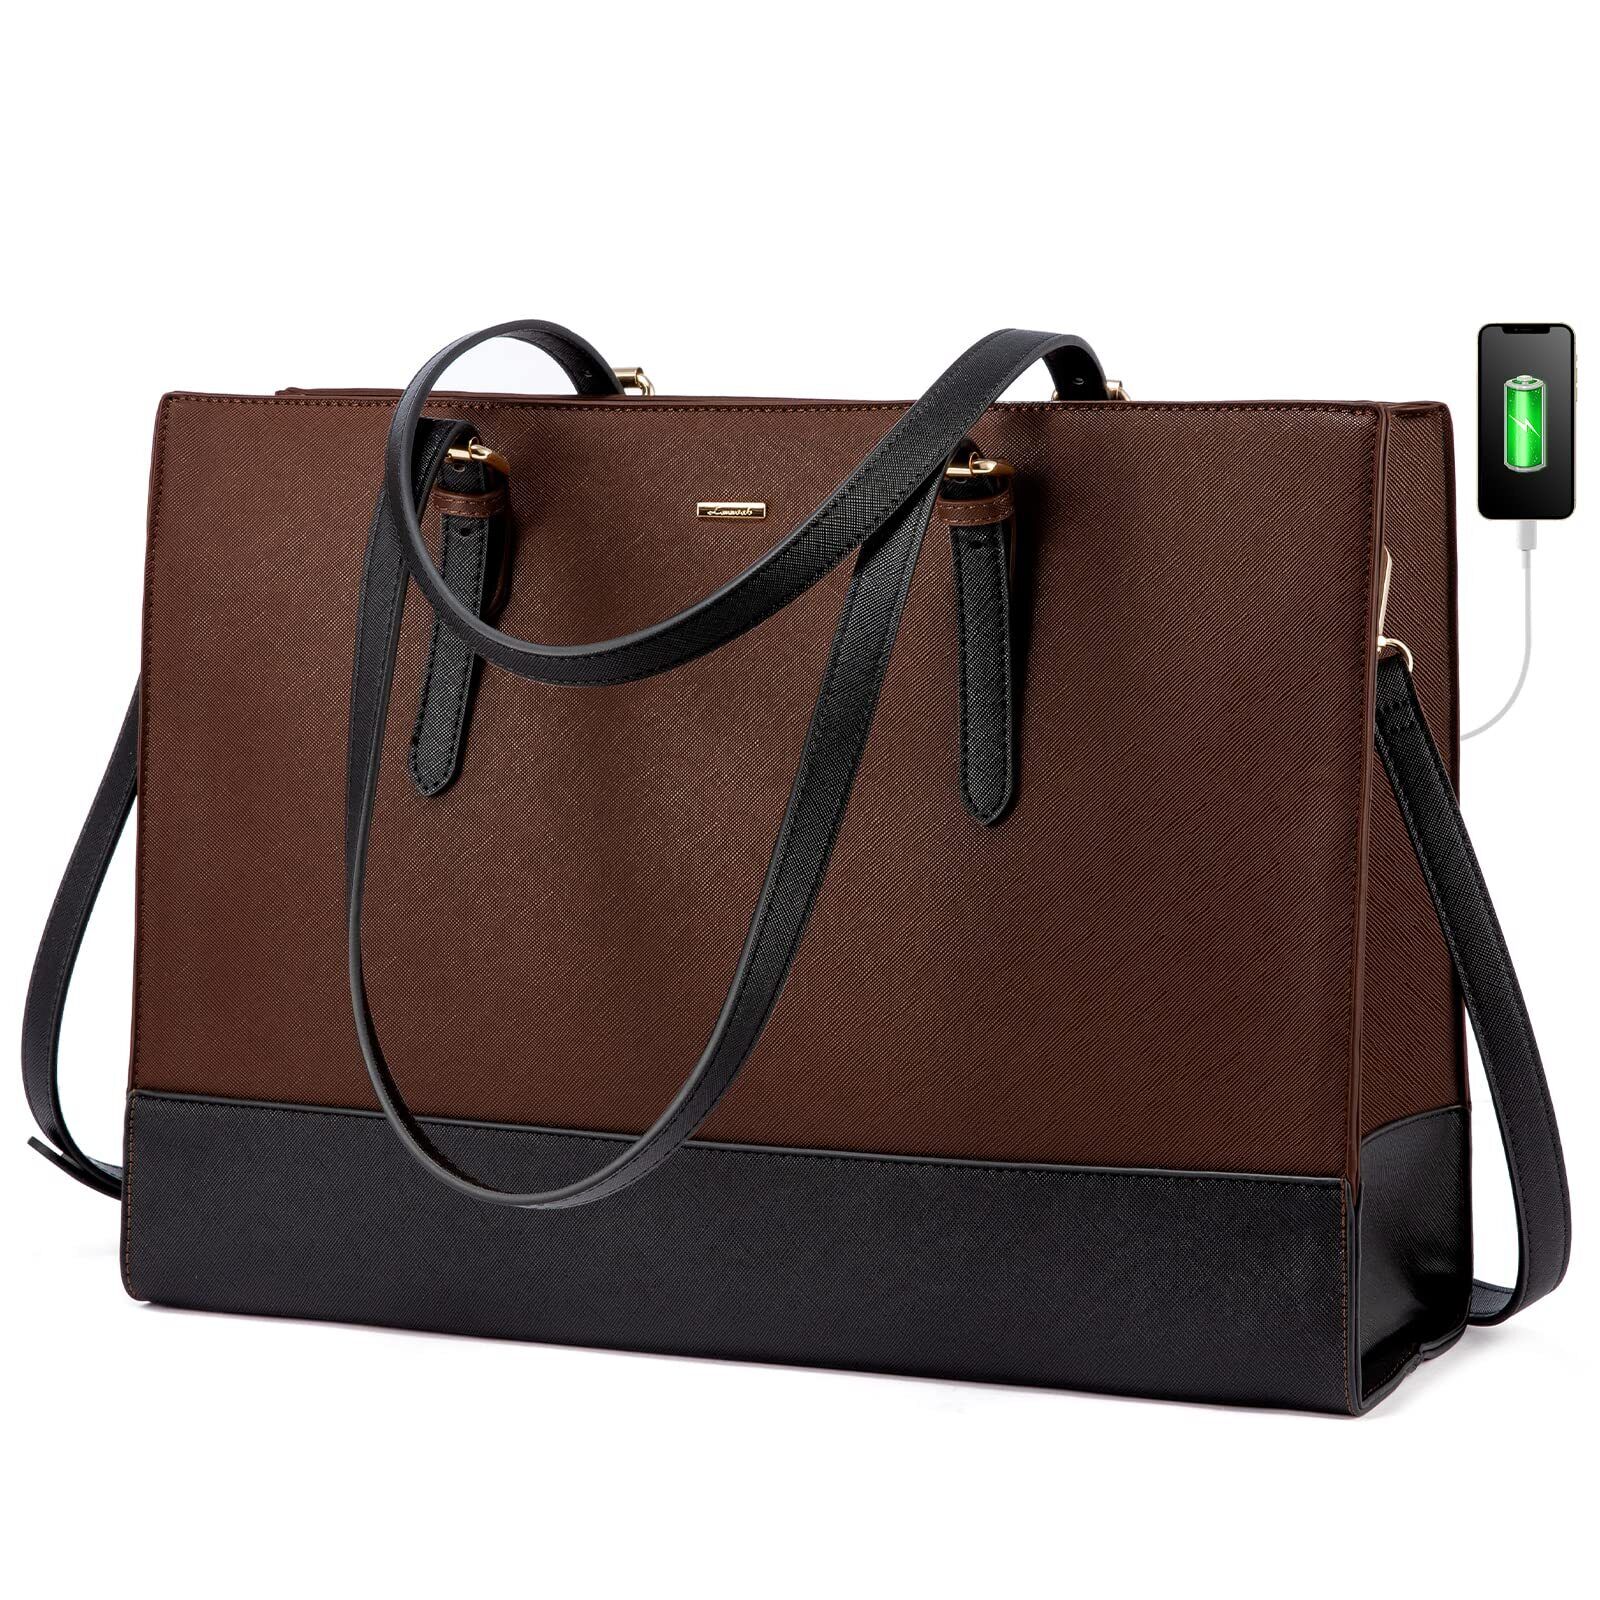 LOVEVOOK Laptop Bag for Women Fashion Computer Tote Bag 15.6 Inch Large Handb...